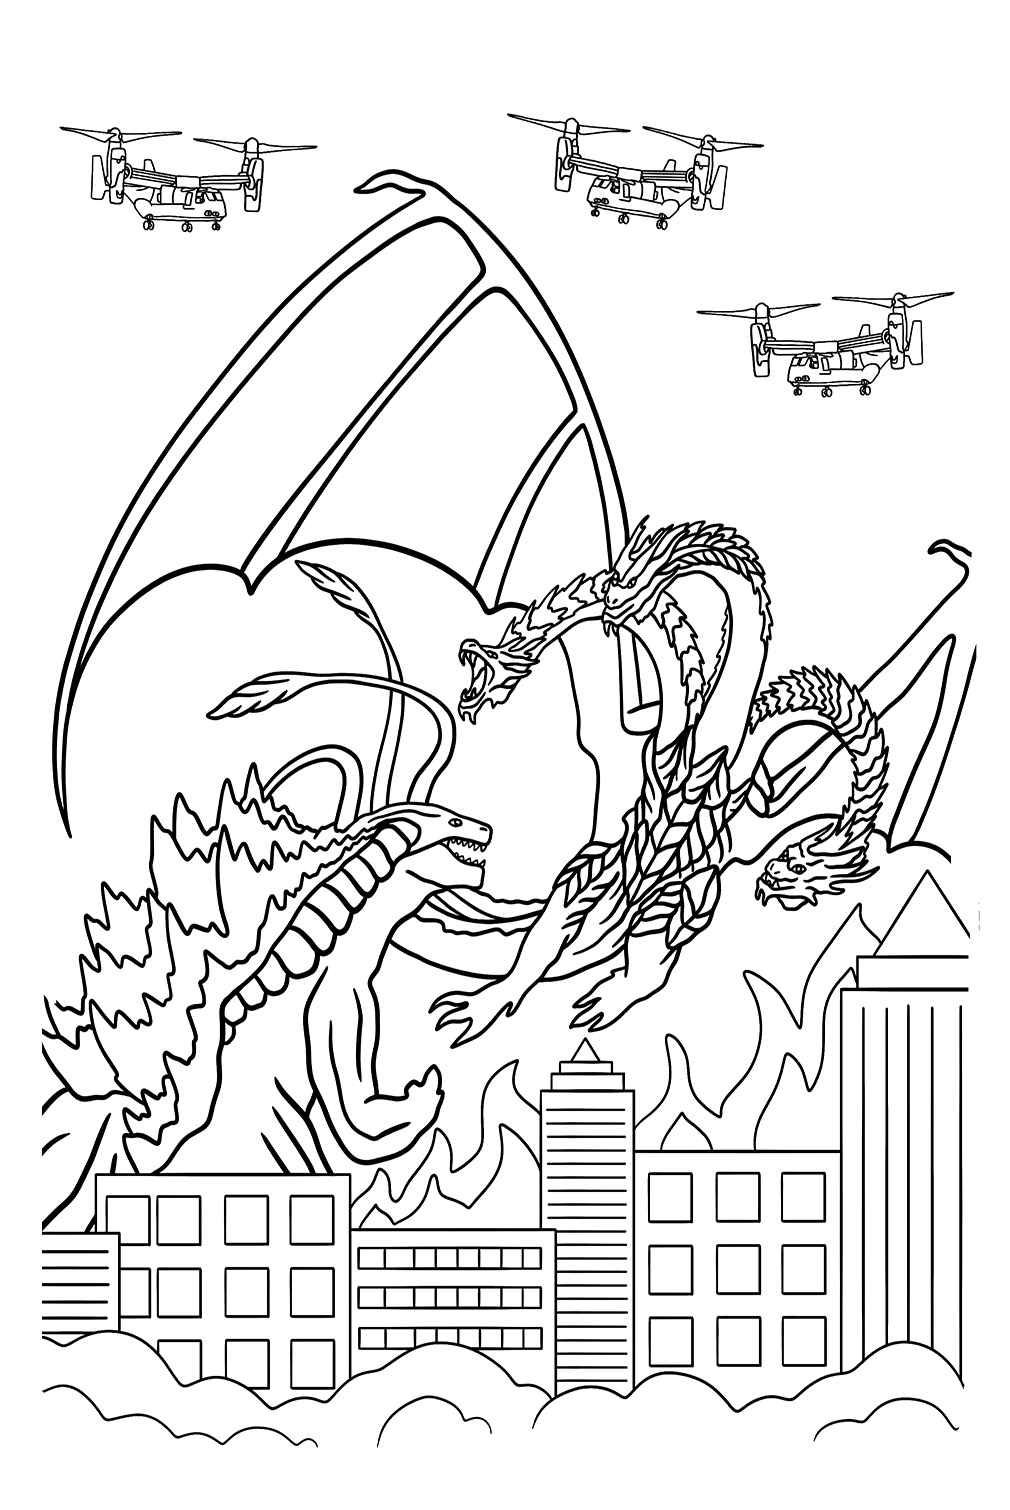 Godzilla Fighting King Ghidorah Coloring Page